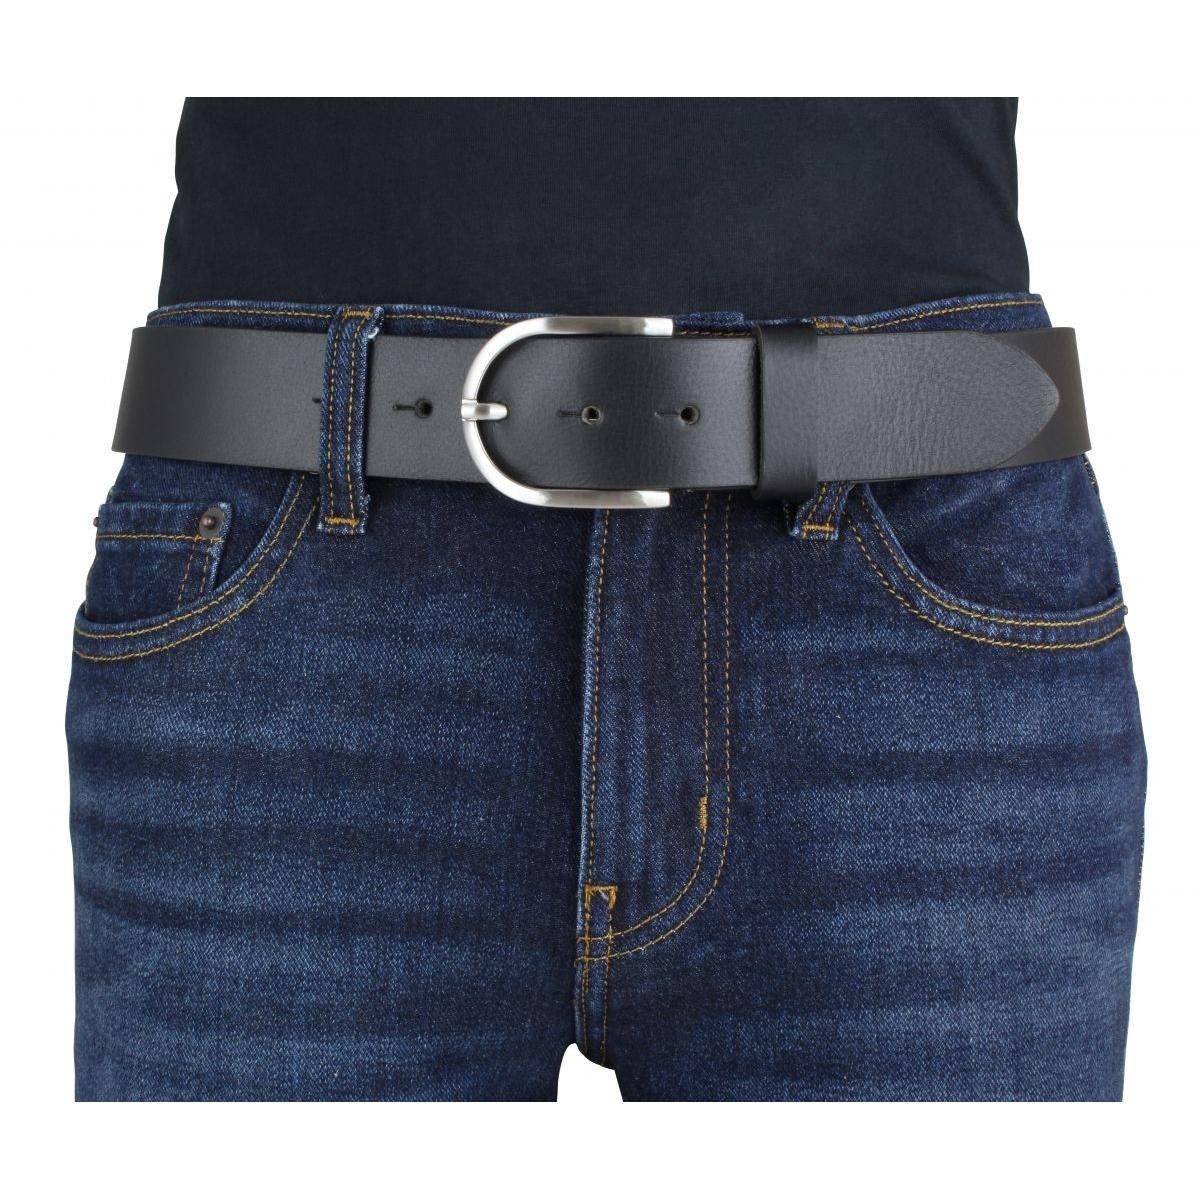 - 40mm für Jeans-Gürtel - BELTINGER Ledergürtel Vollbüffelleder aus Schwarz, Silber 4 Damen cm Damen-Gürtel